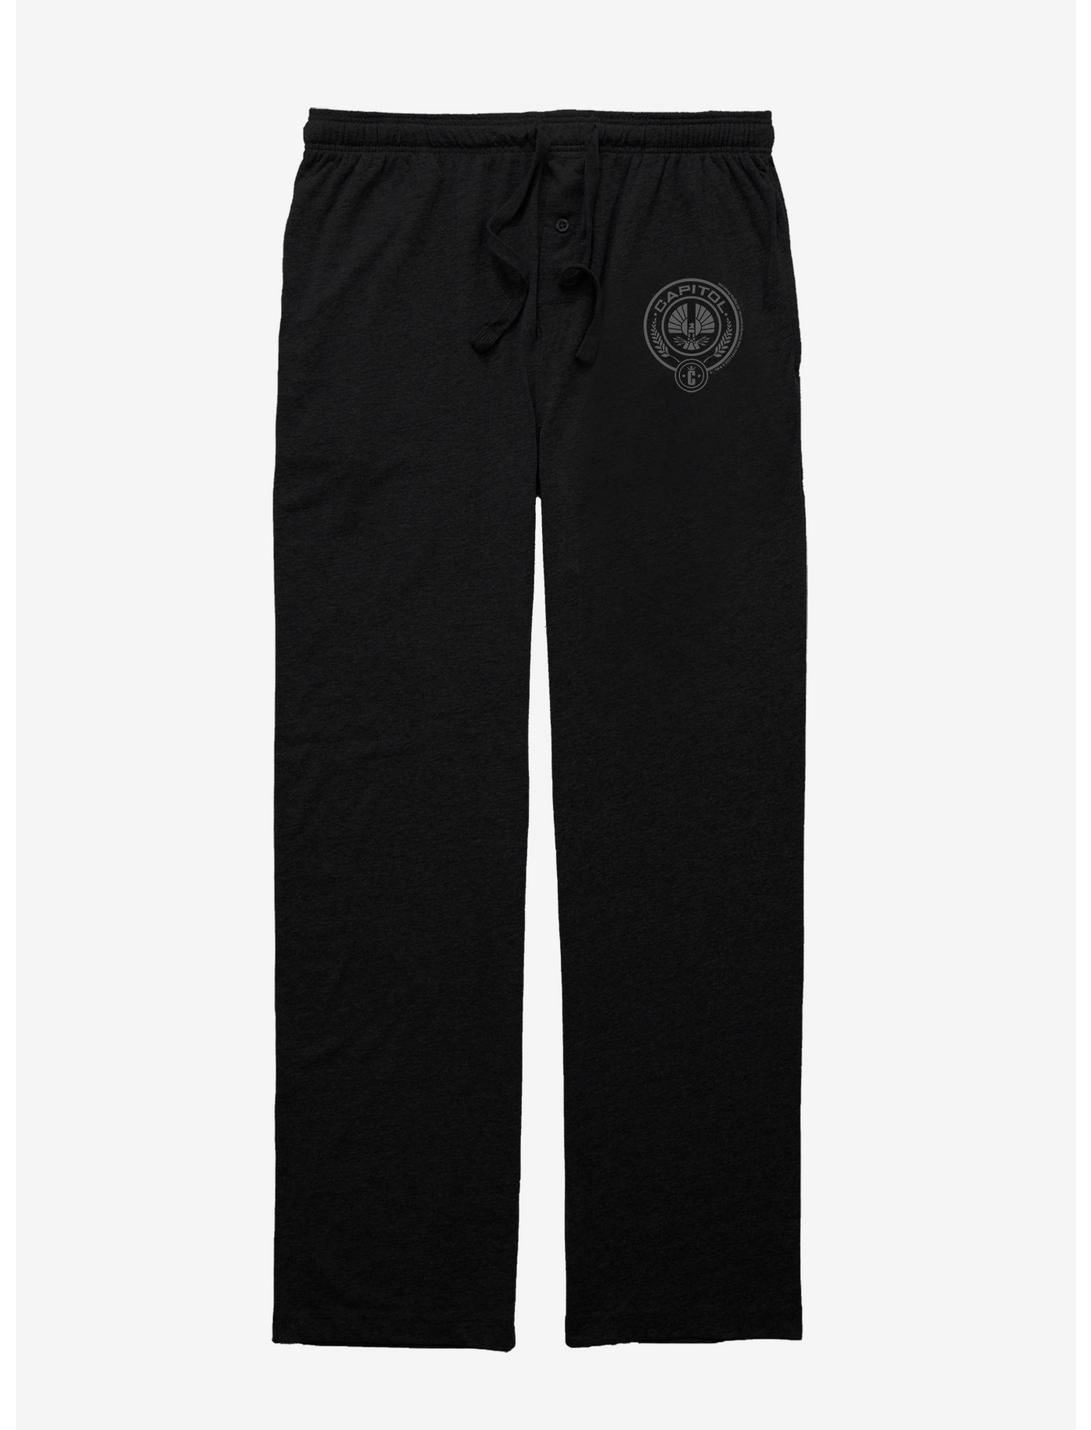 Hunger Games Capitol Emblem Pajama Pants, BLACK, hi-res